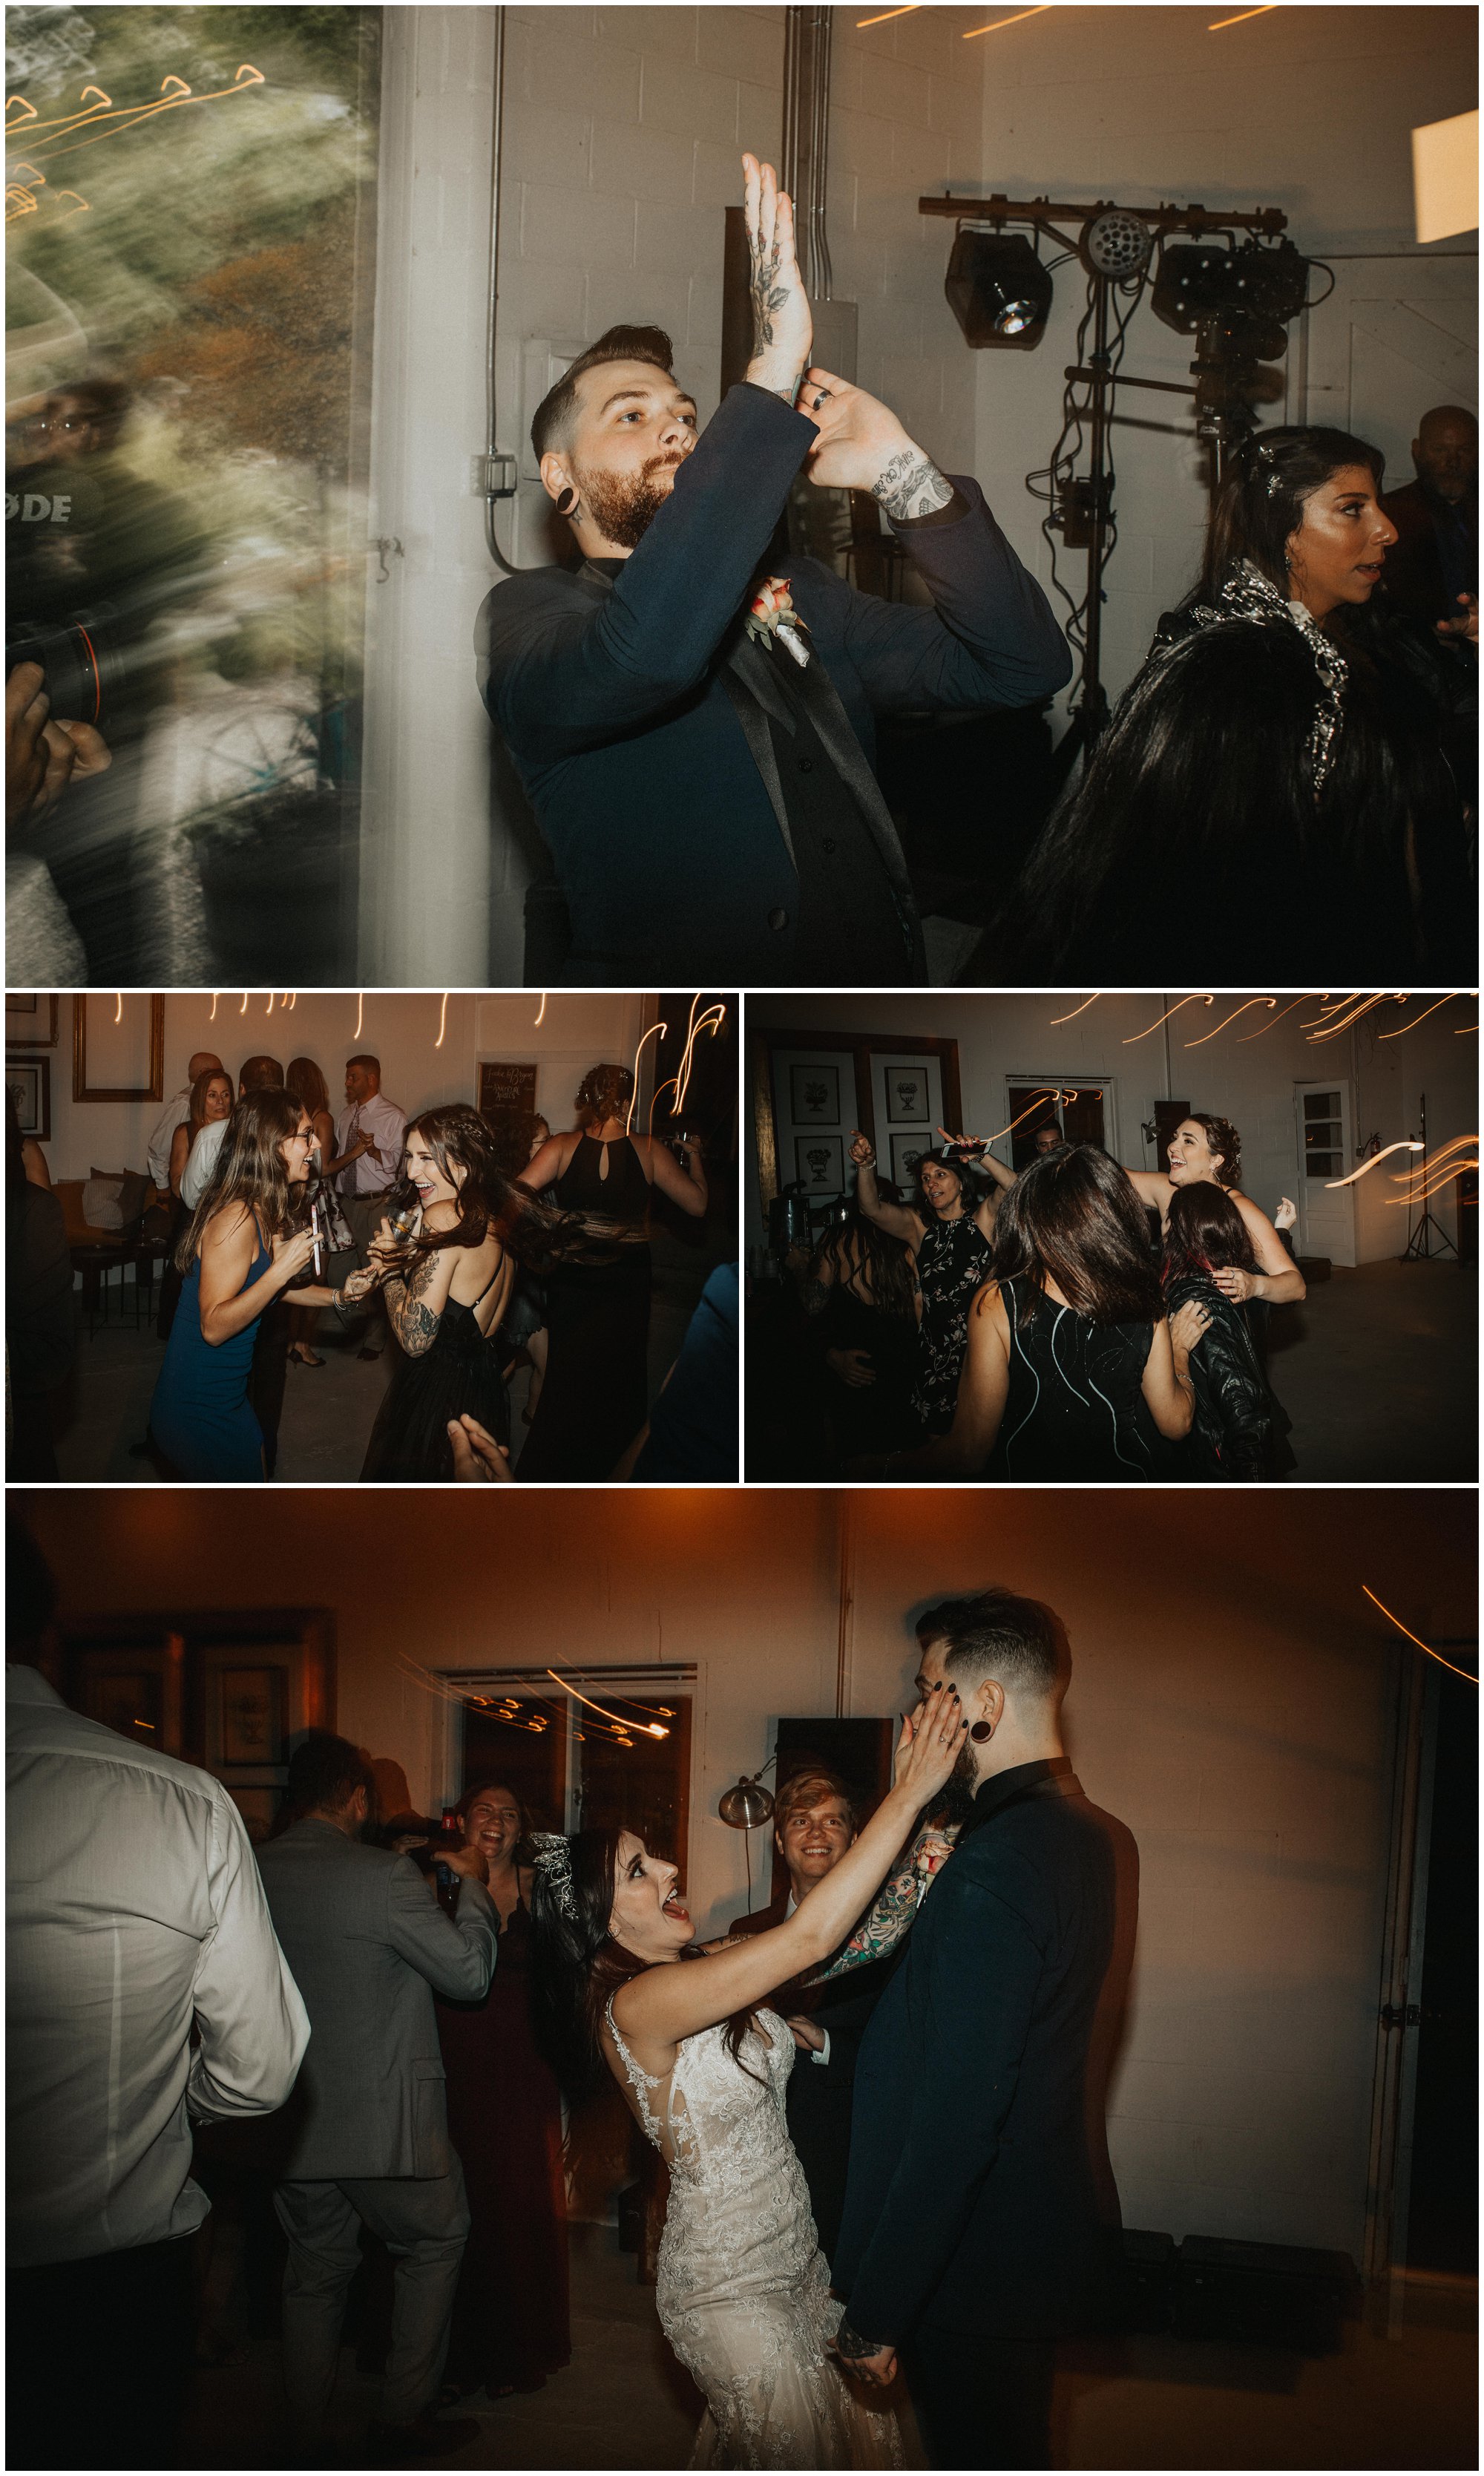 dancing photos at m & d wedding venue in catskills